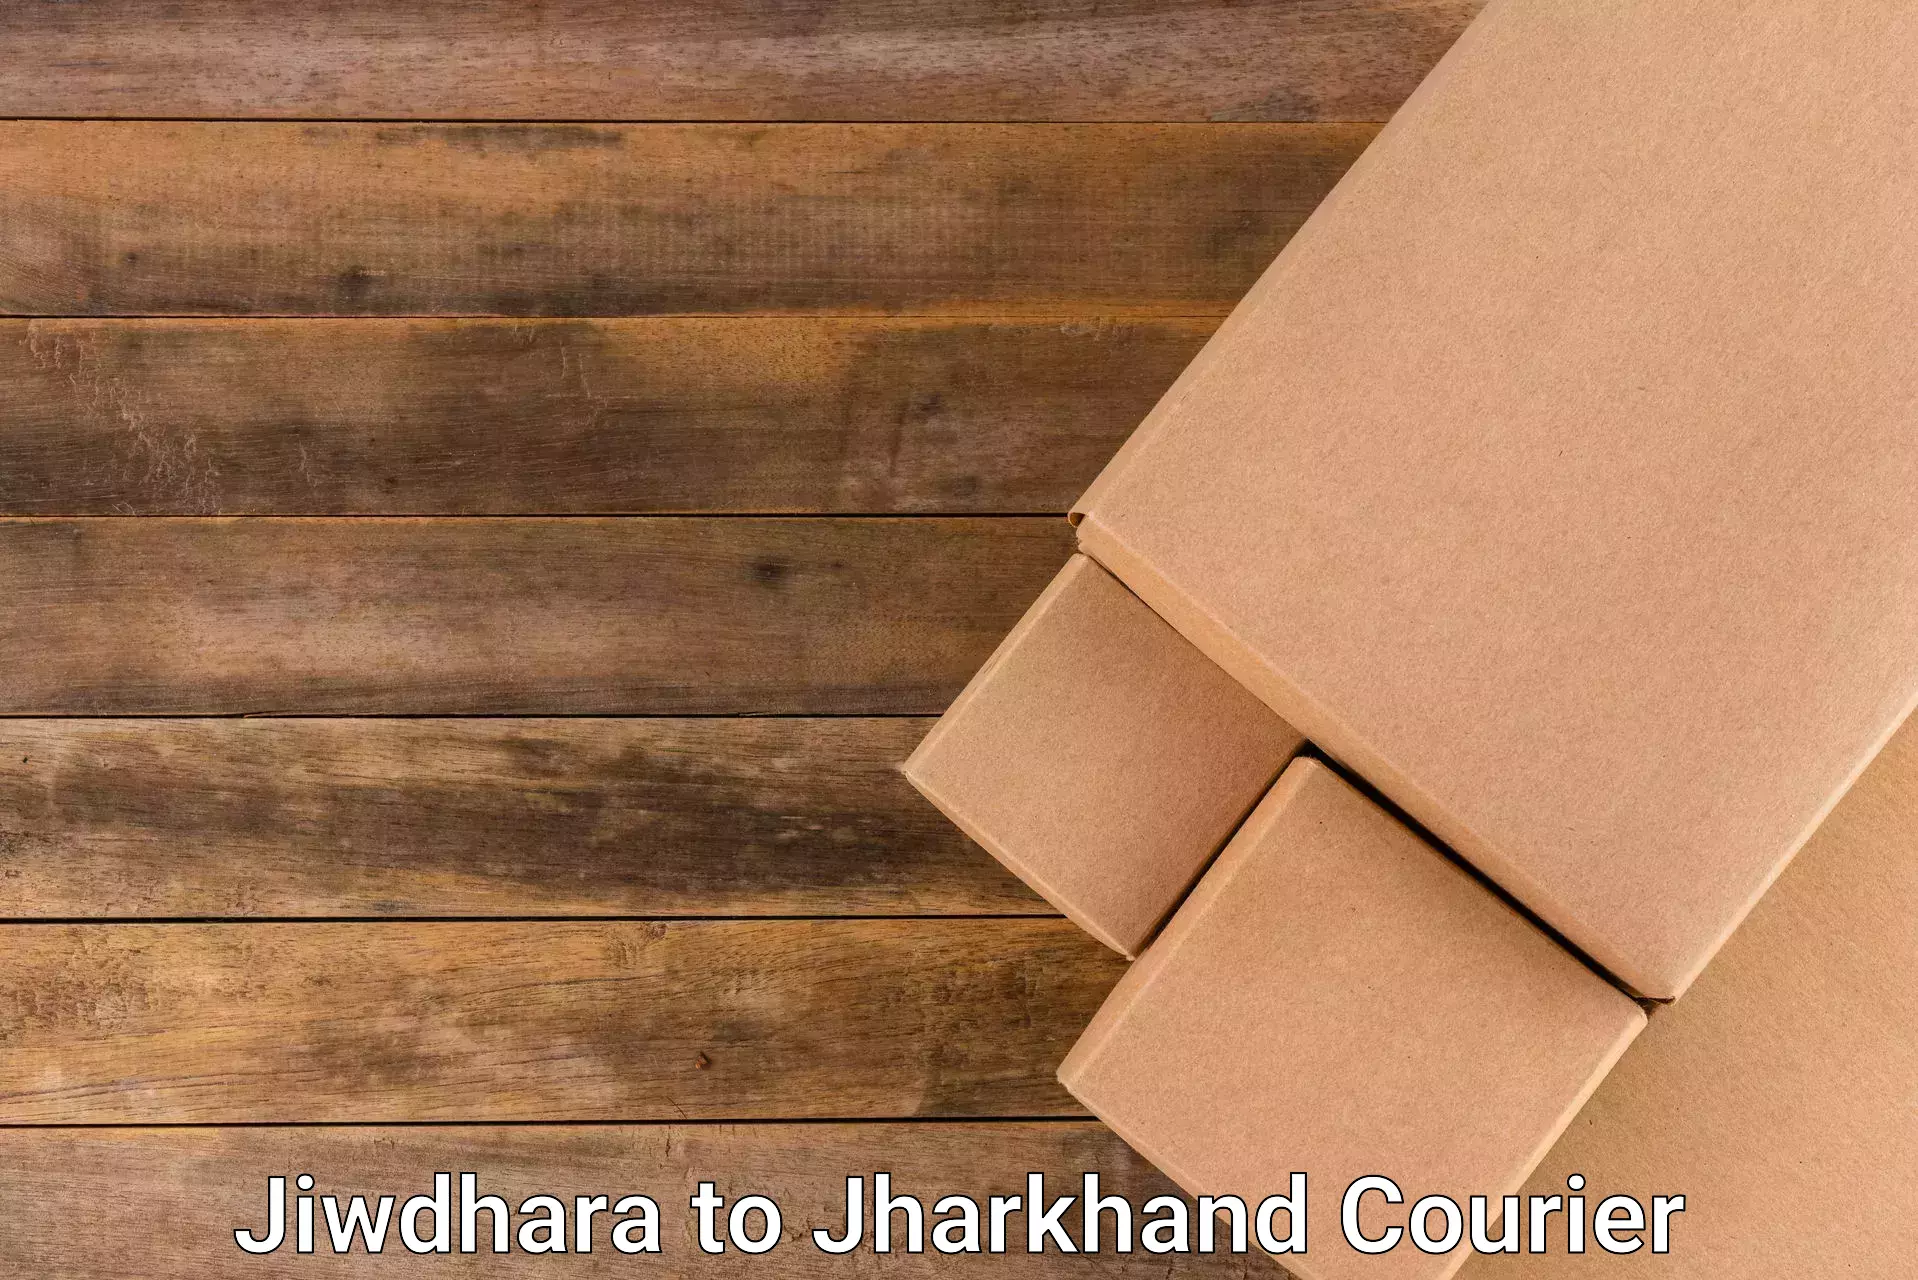 Package delivery network Jiwdhara to Medininagar